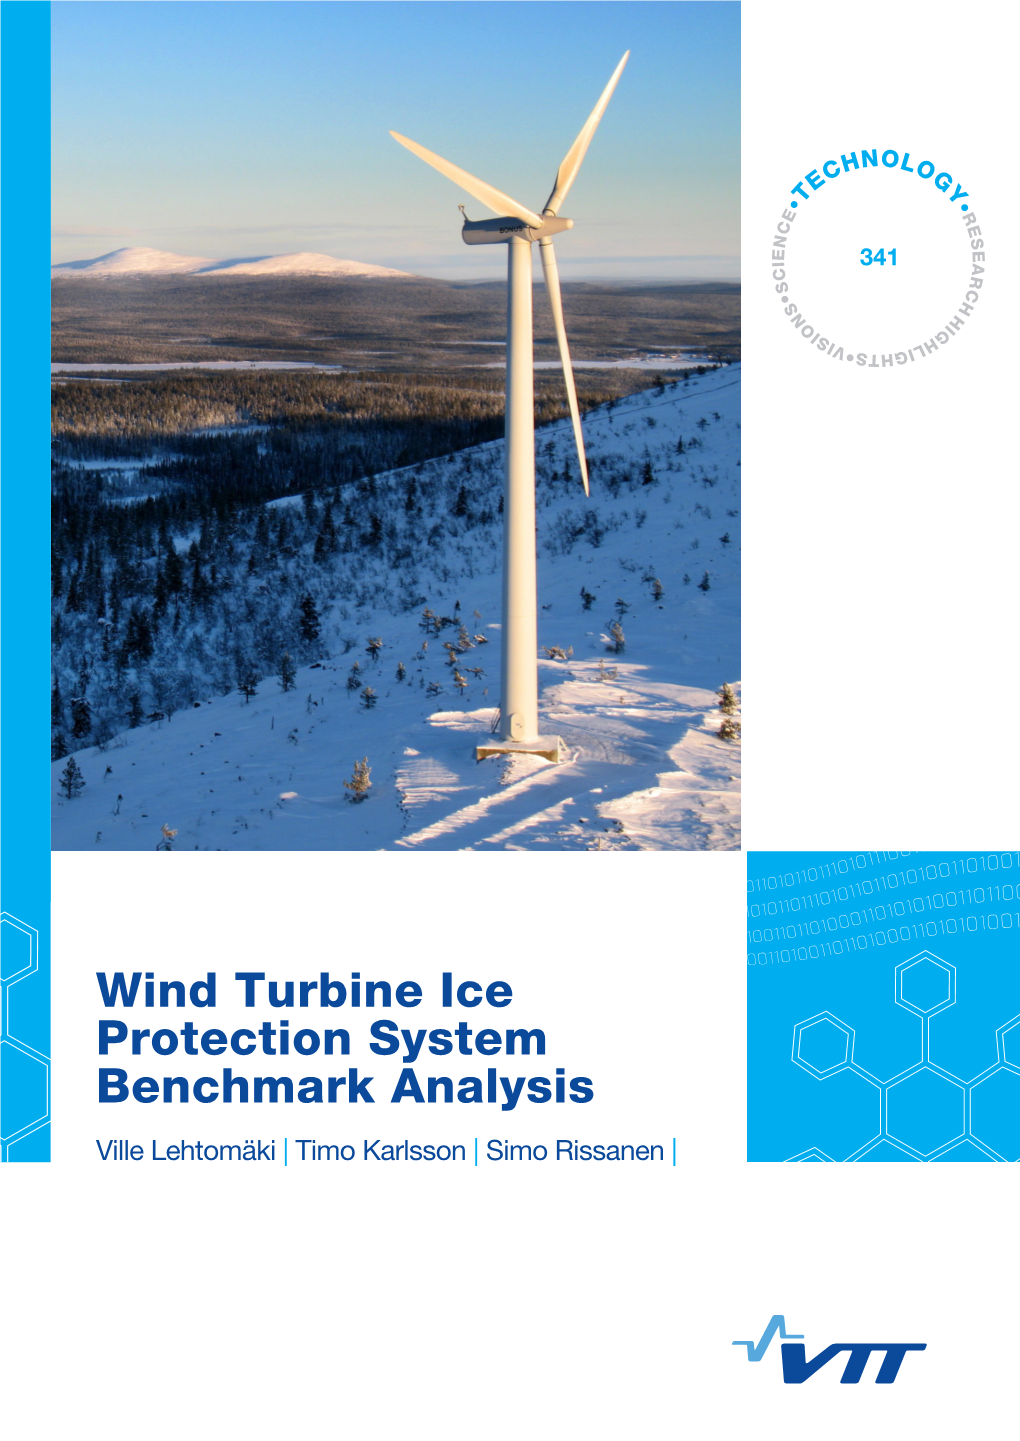 Wind Turbine Ice Protection System Benchmark Analysis